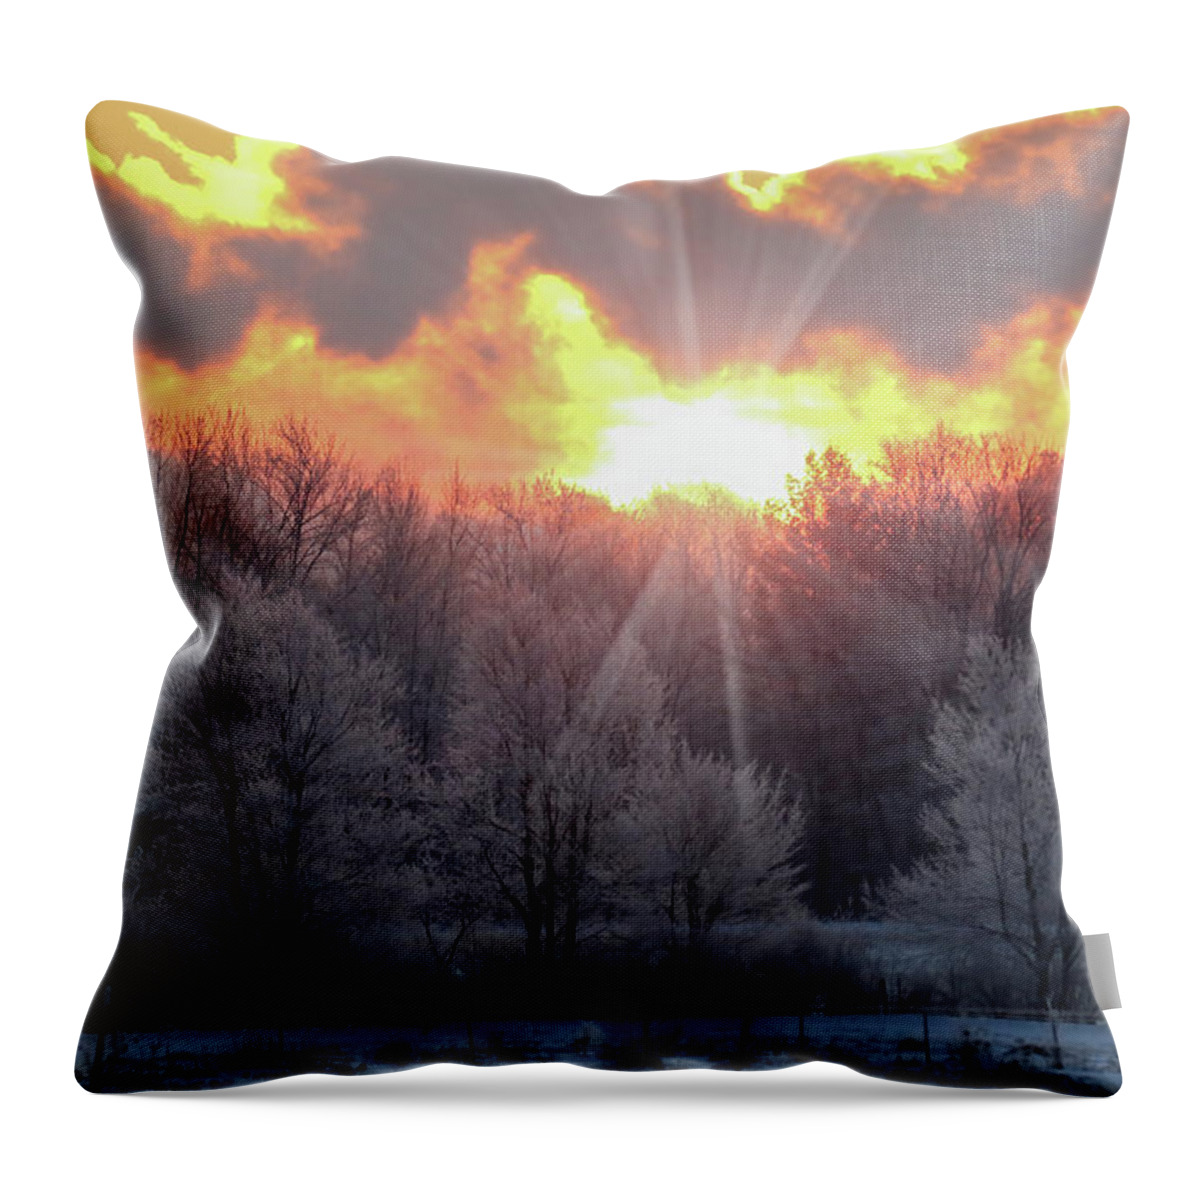 Sunrise Throw Pillow featuring the photograph Crisp Sunrise by Brook Burling